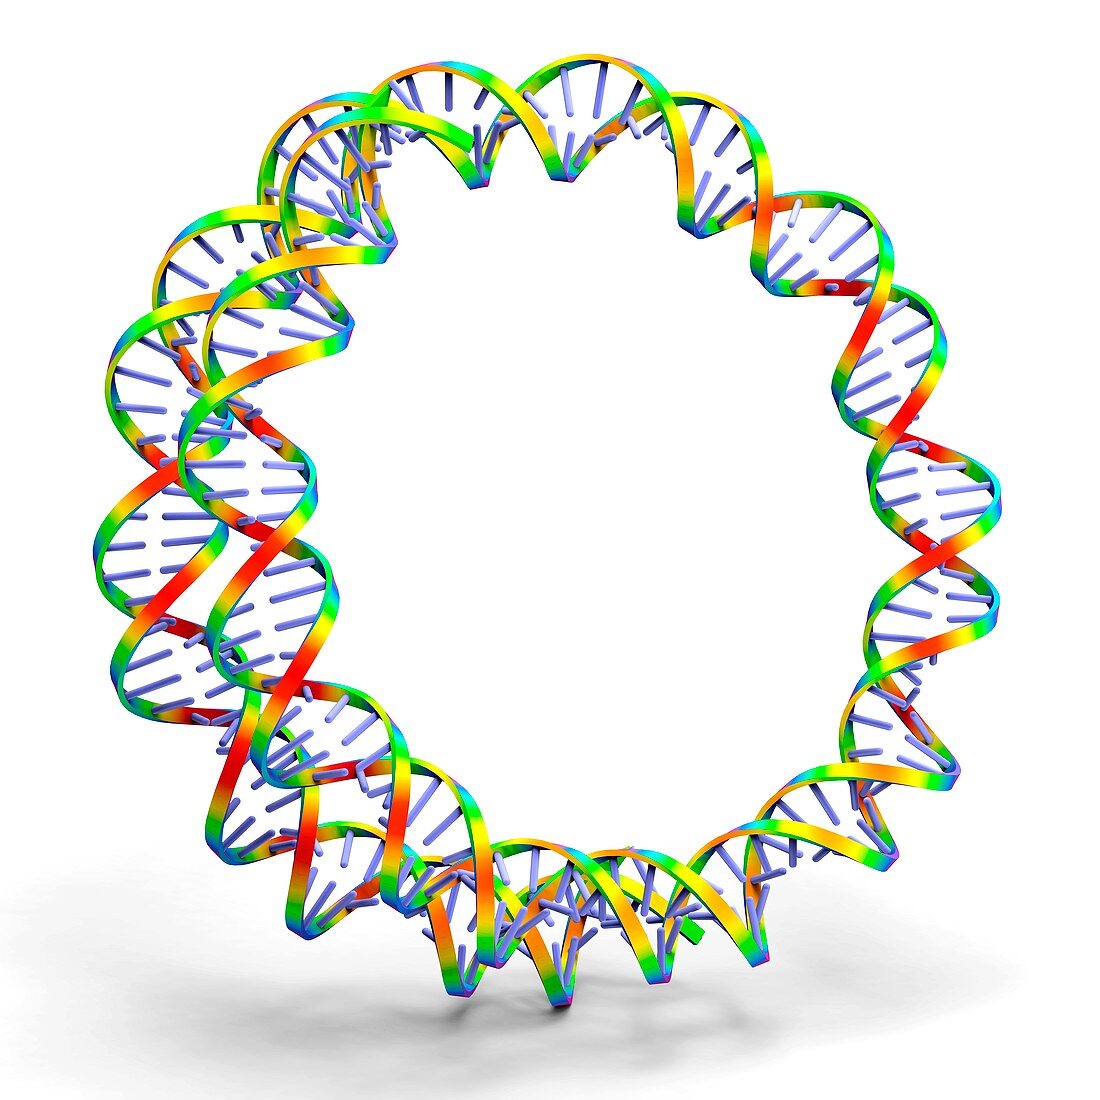 Circular DNA molecule,artwork